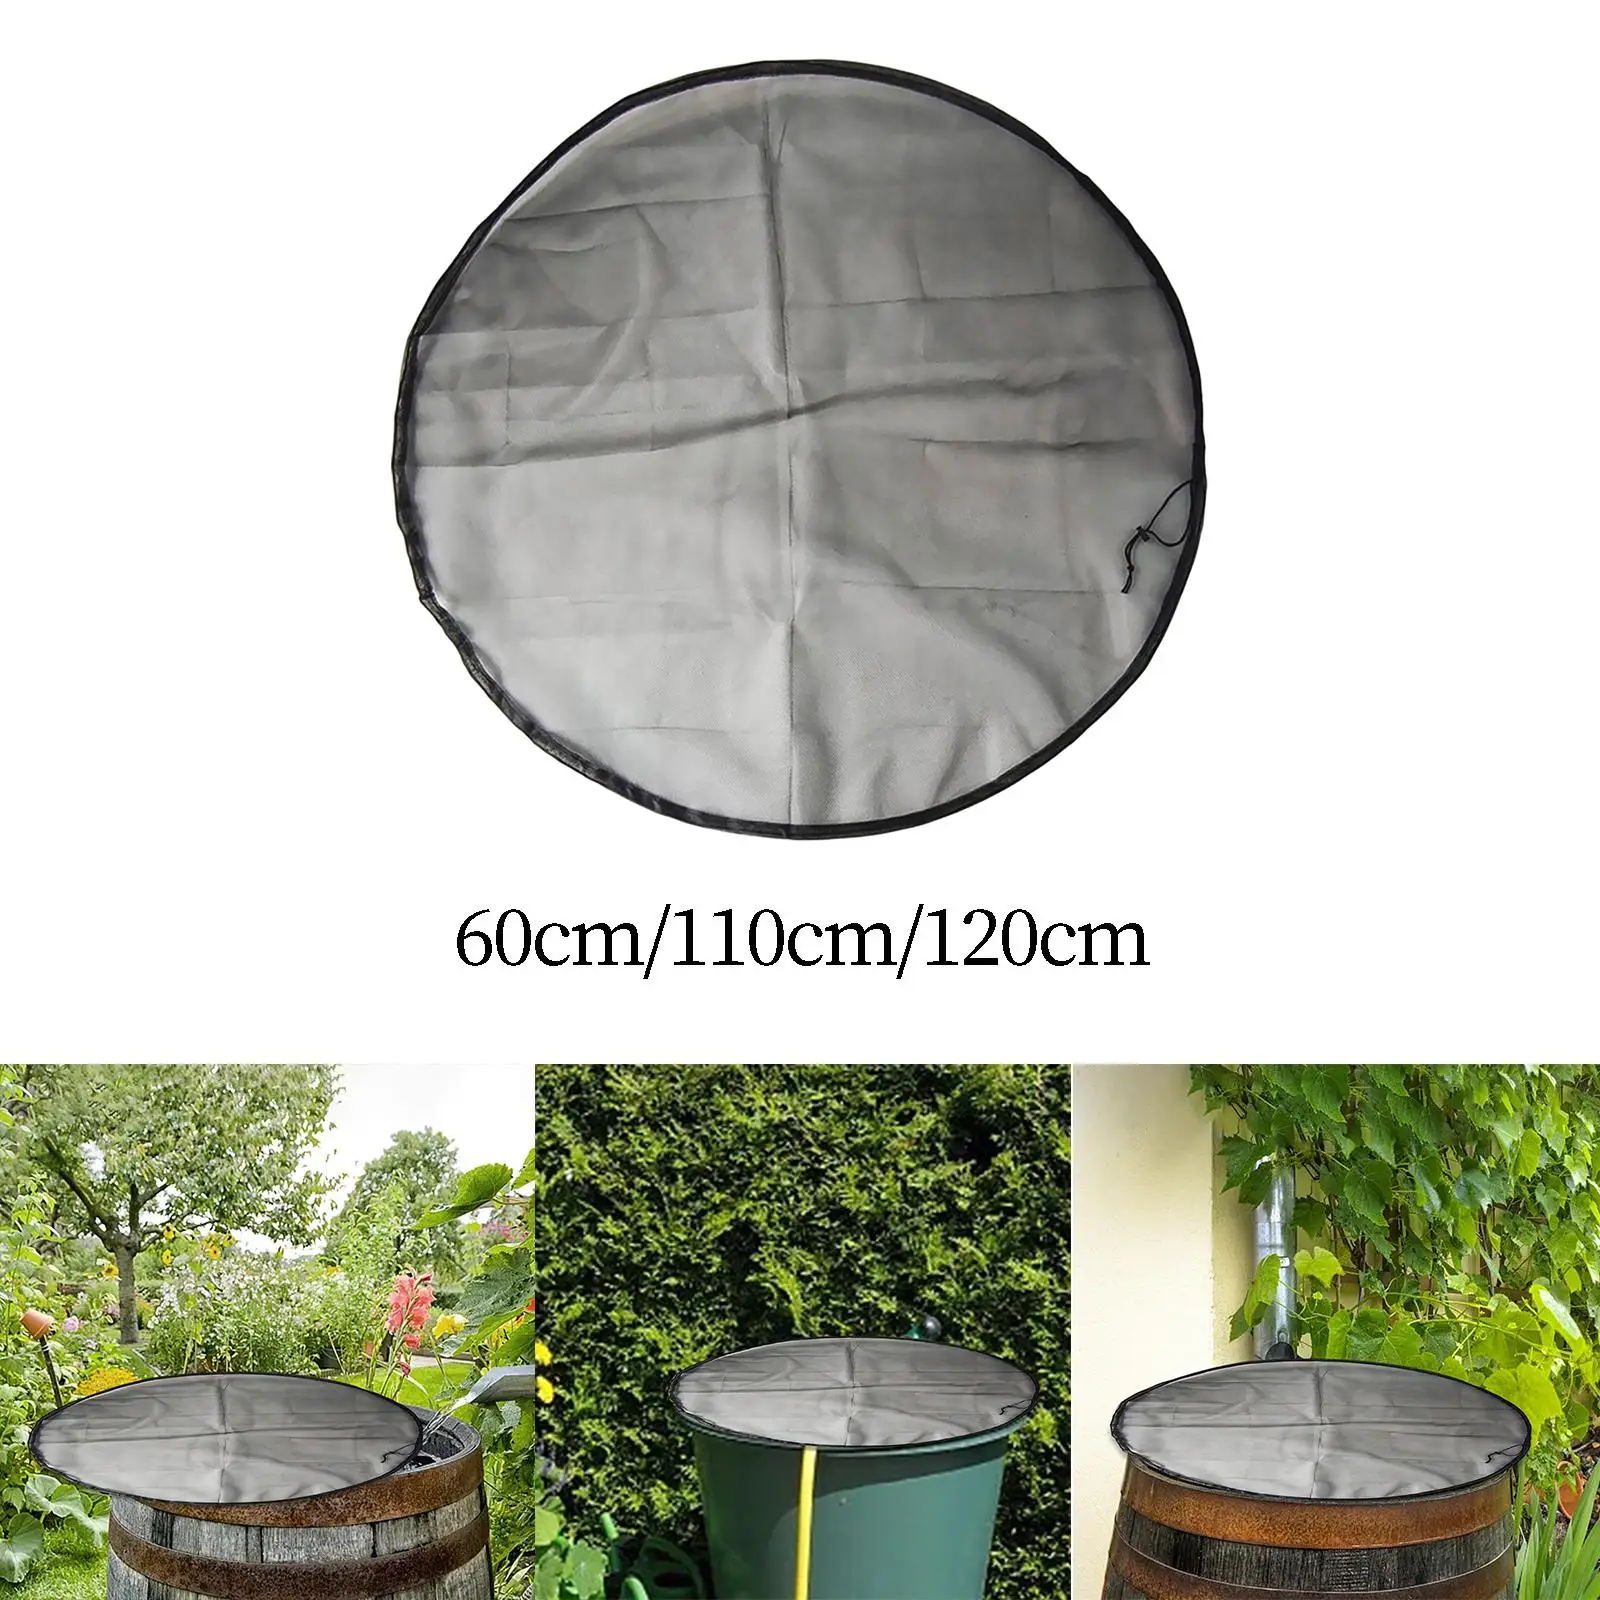 Mesh Cover for Rain Barrel, Rain Barrel Netting Screen Water Barrel Net Cover for Prevent Fallen Leaves Small Items Debris Out